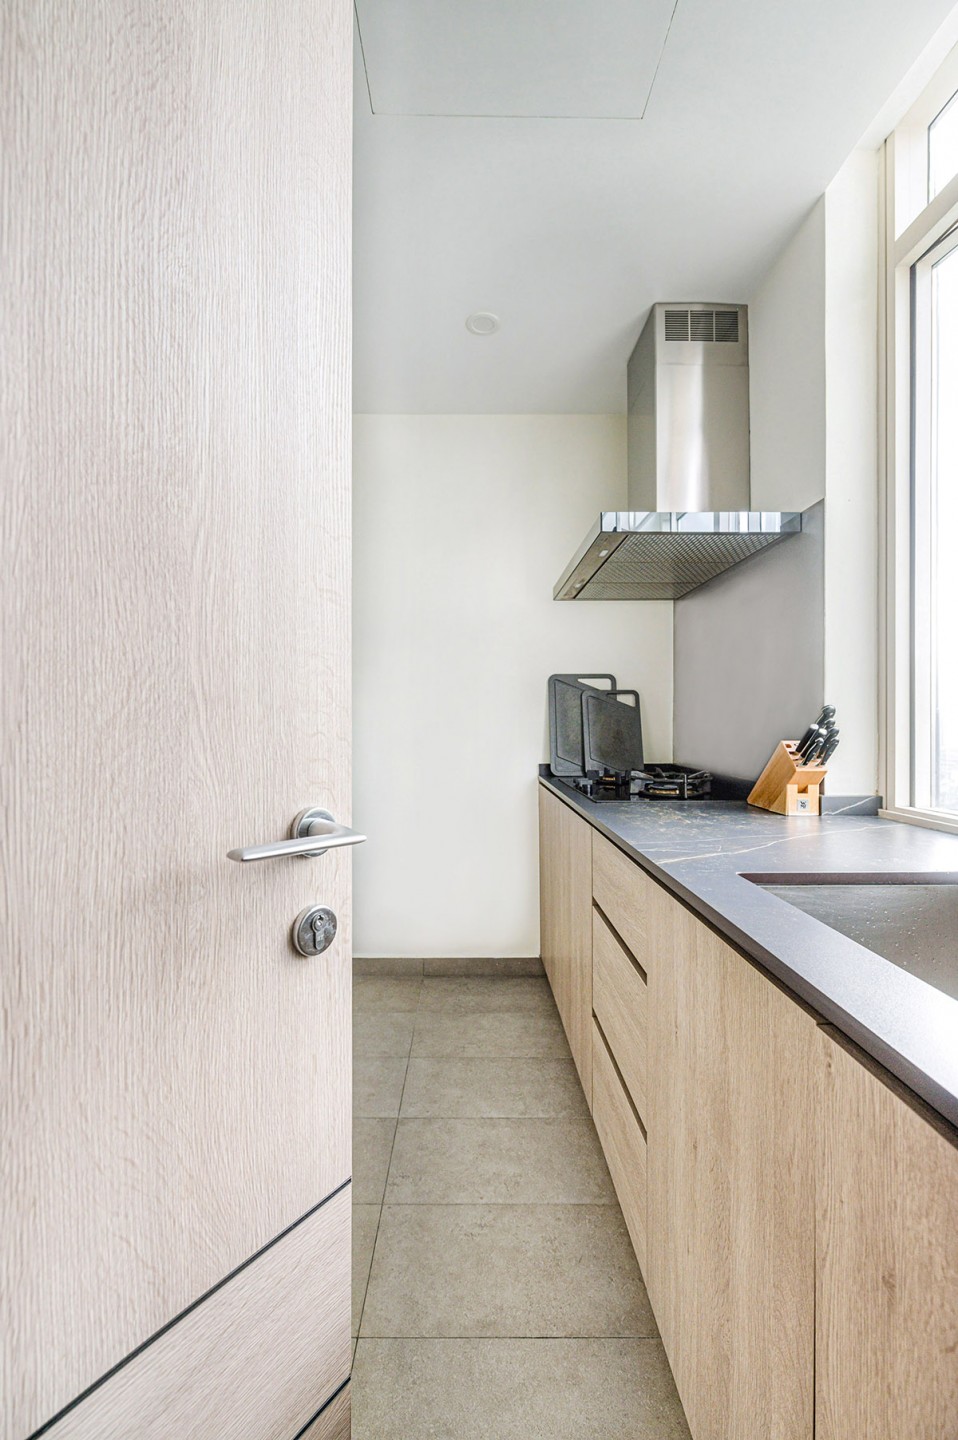 squarerooms v-zug vzug kitchen renovation homeowners interview appliances grey neutral colour palette design style open concept island wood cabinets cooker range hood